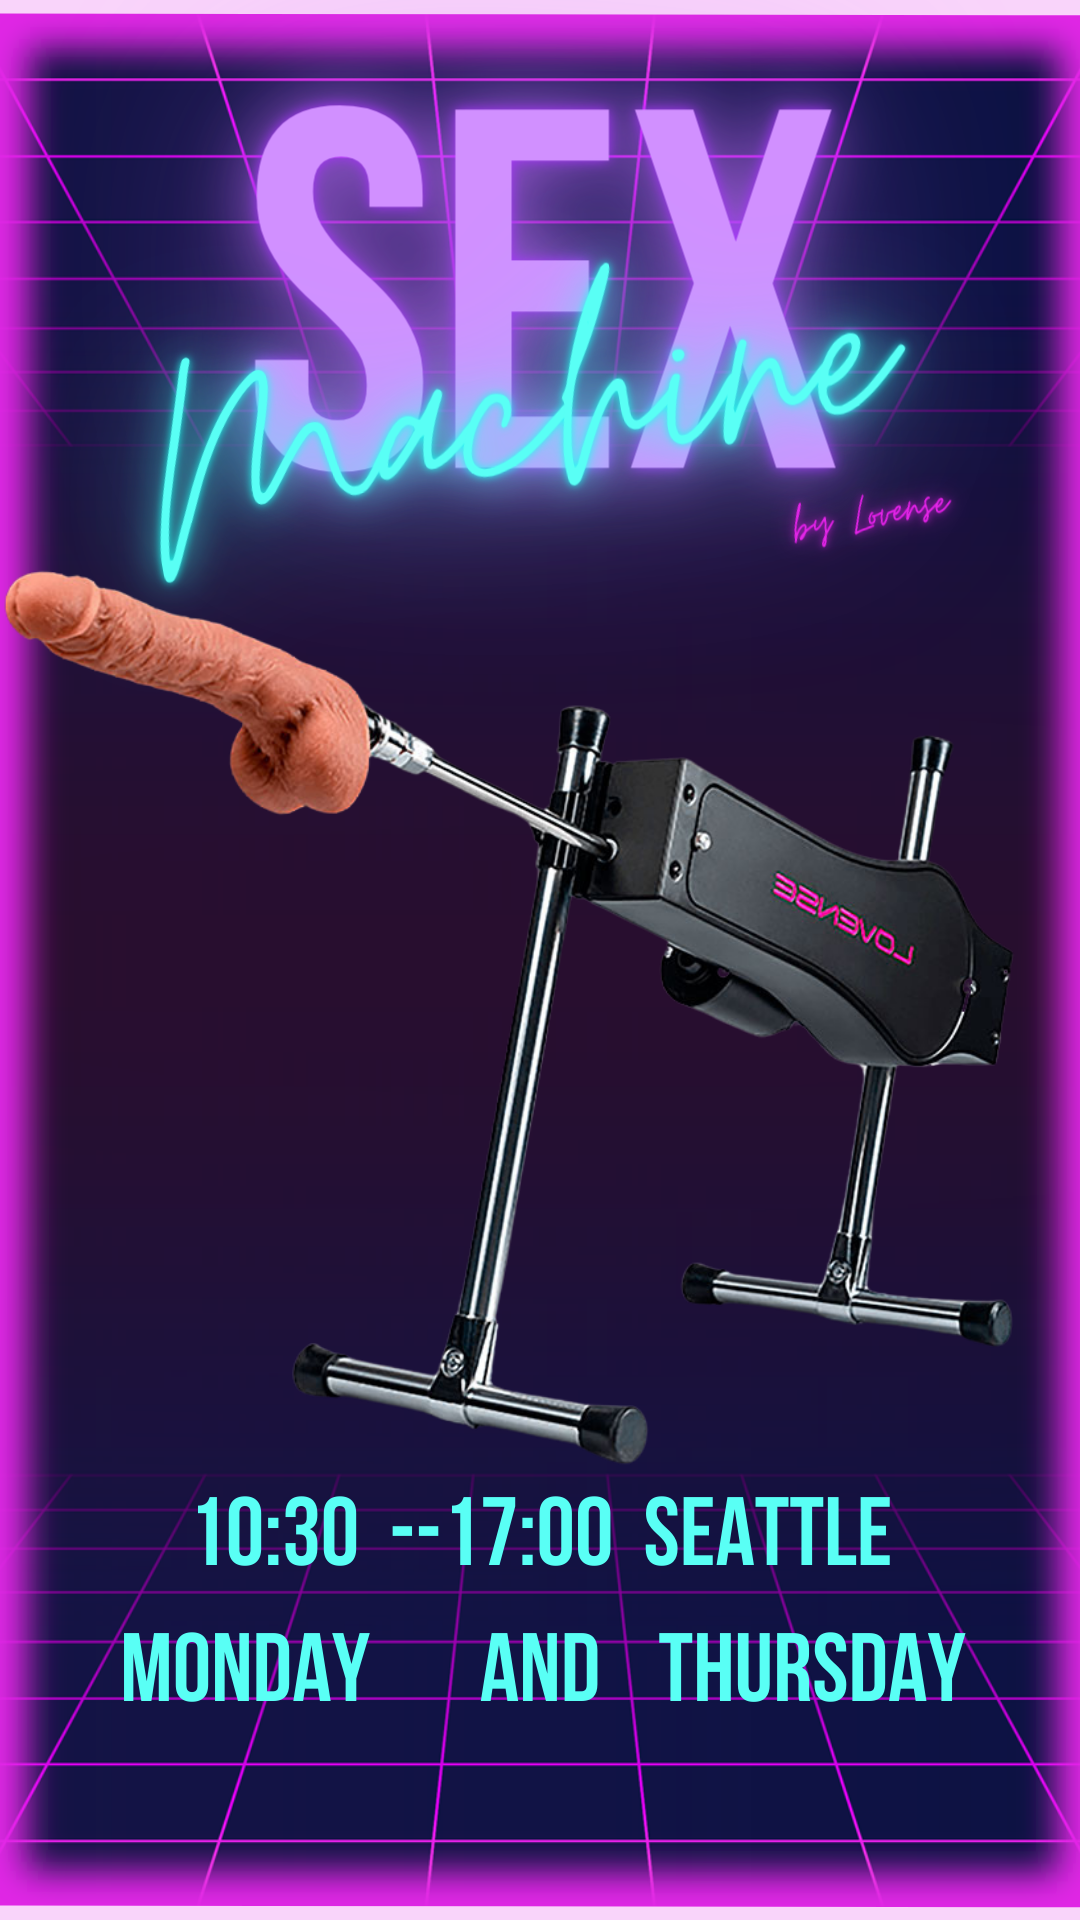 MercyLyn sex machine image: 1